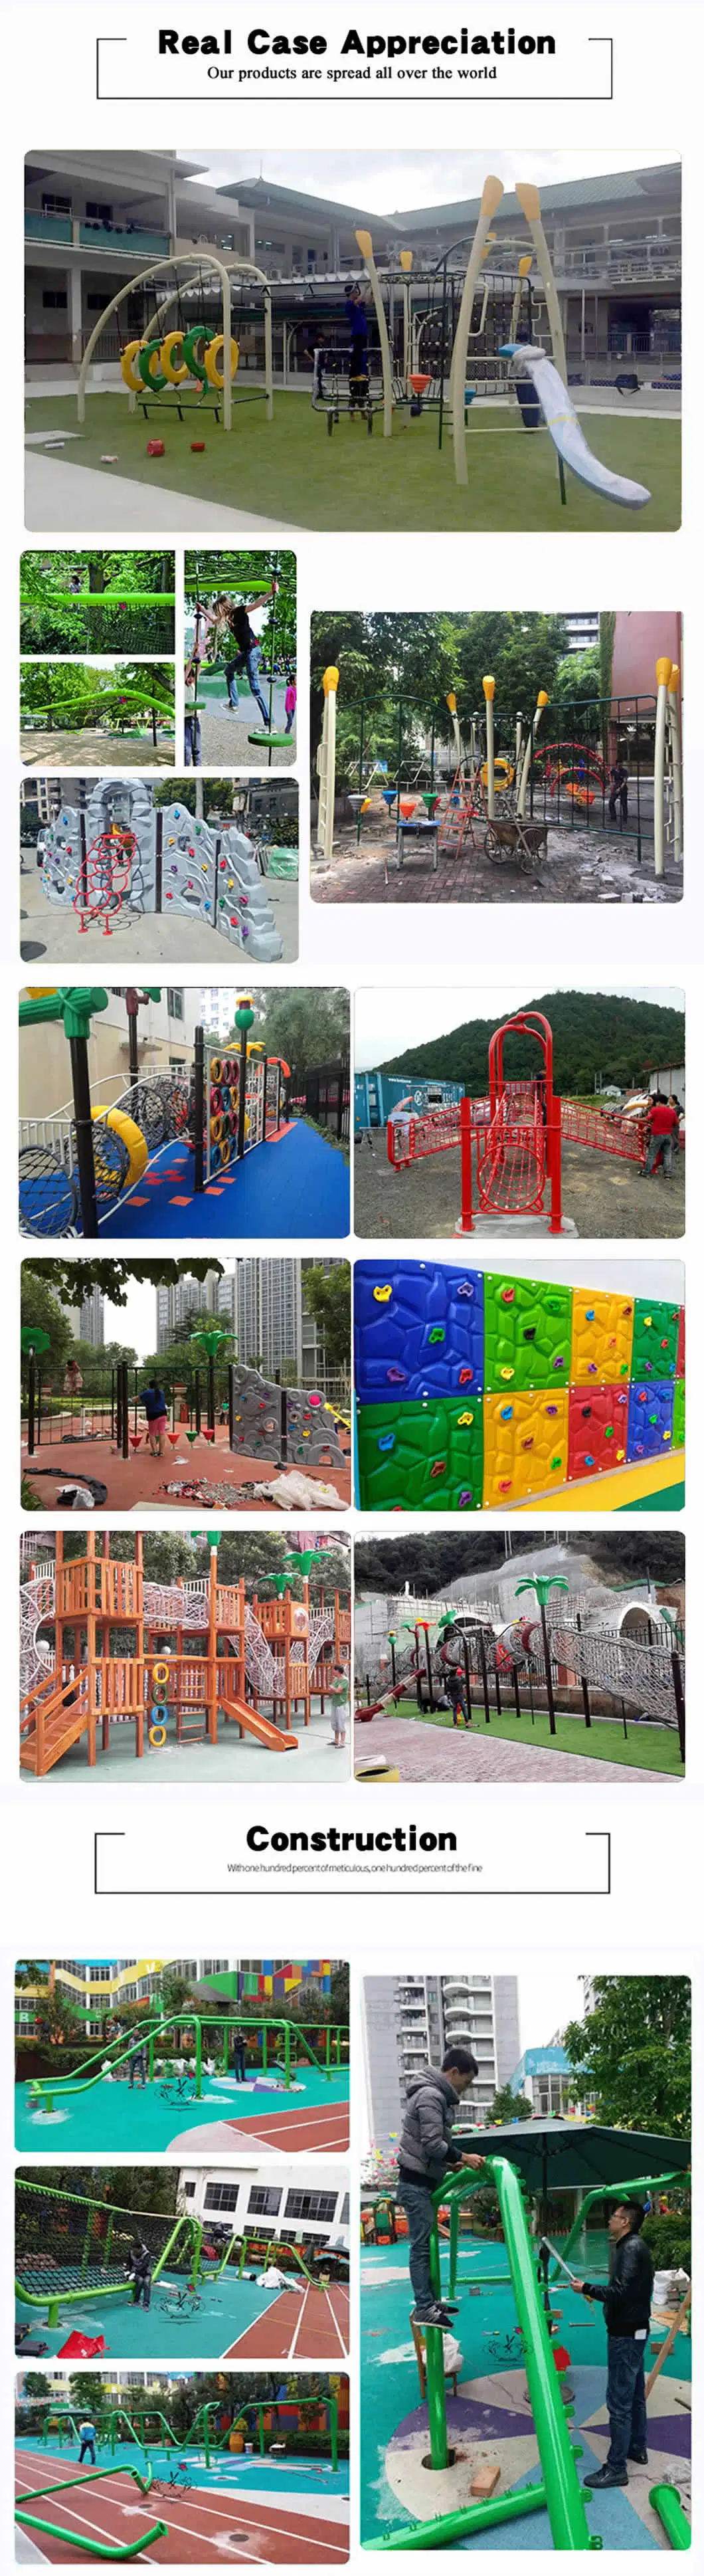 Wholesale Reasonable Structure Anti-Static Kids Outdoor Playground Equipment Slide